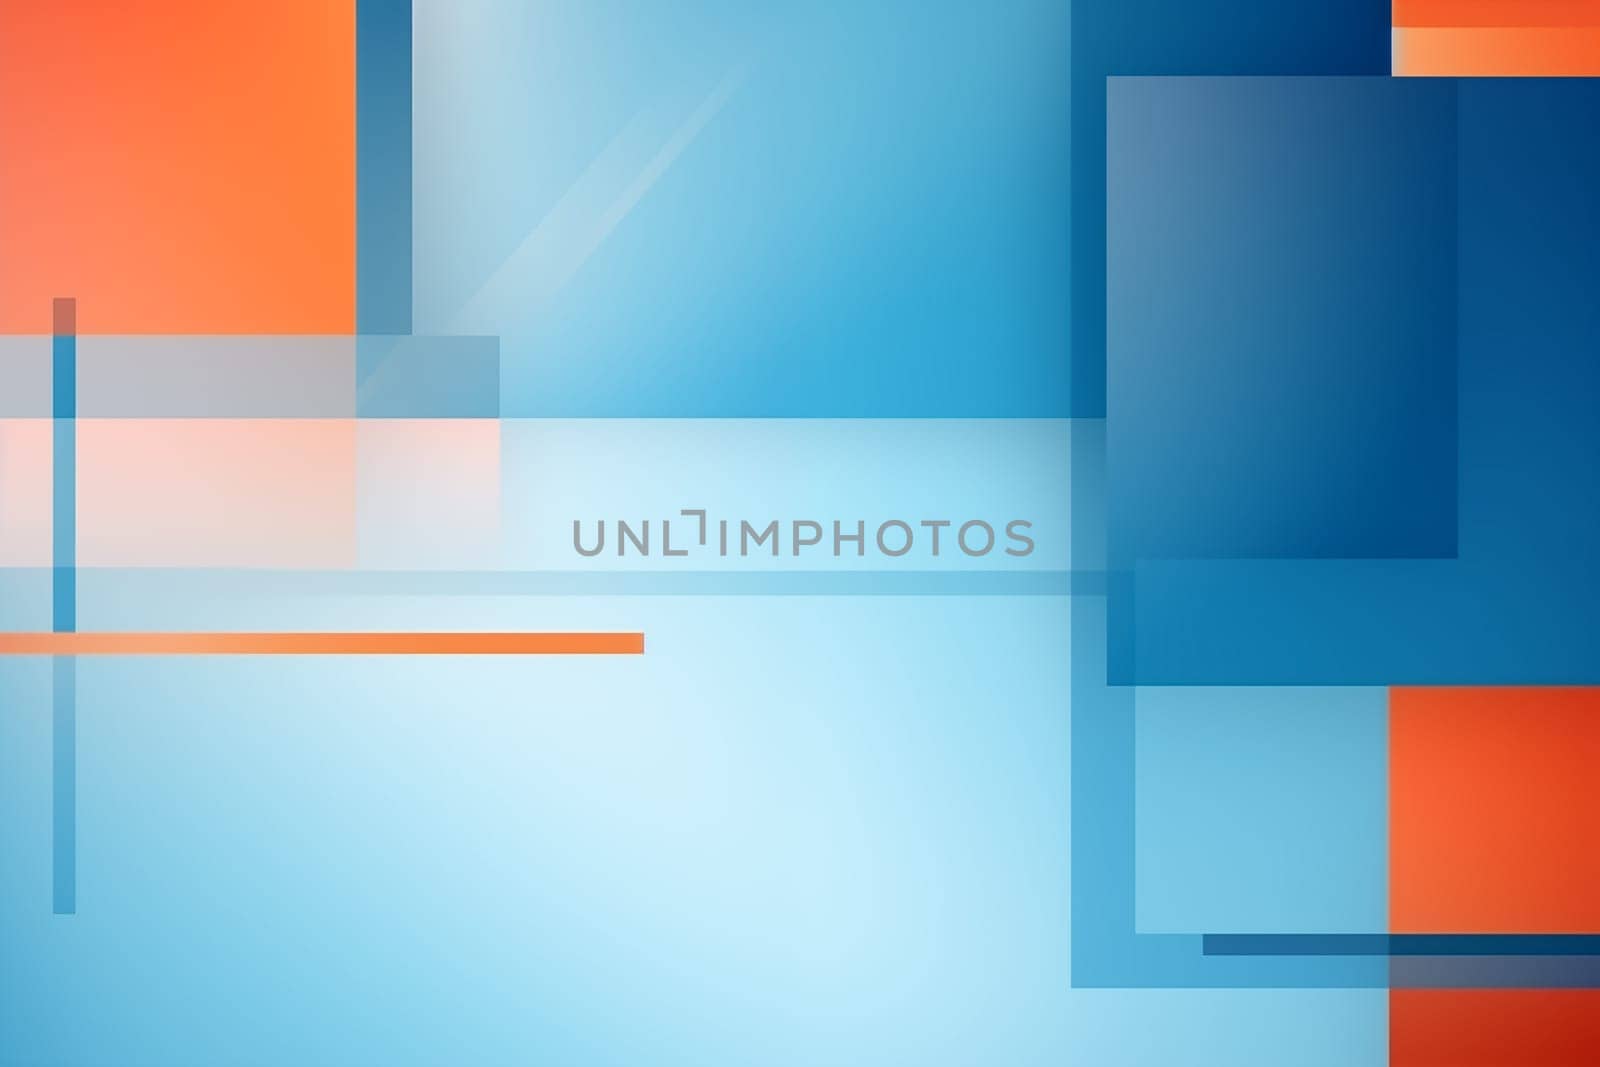 Abstract background blue orange modern geometric shape for wallpaper banner leaflet catalog cover flyer. High quality photo